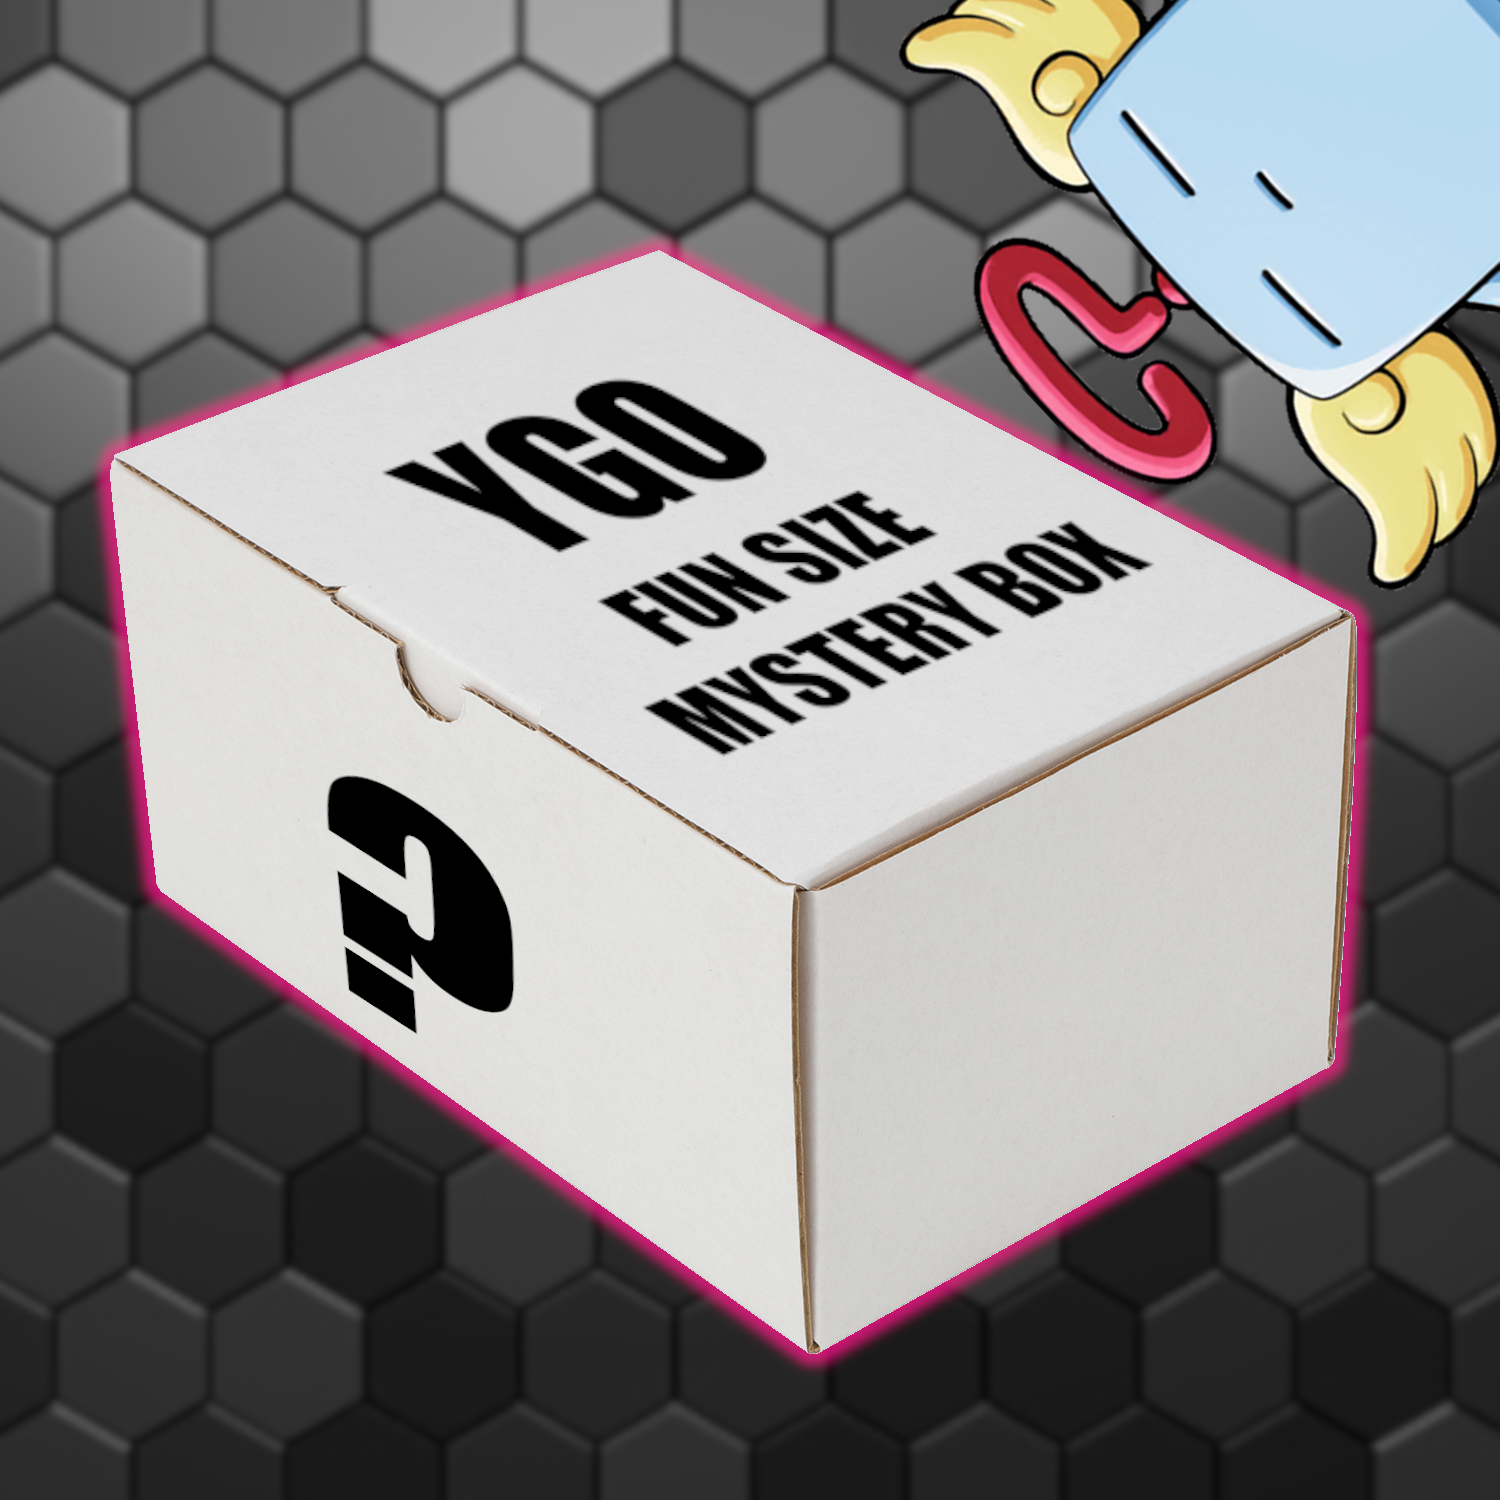 DESIGNER MYSTERY BOX